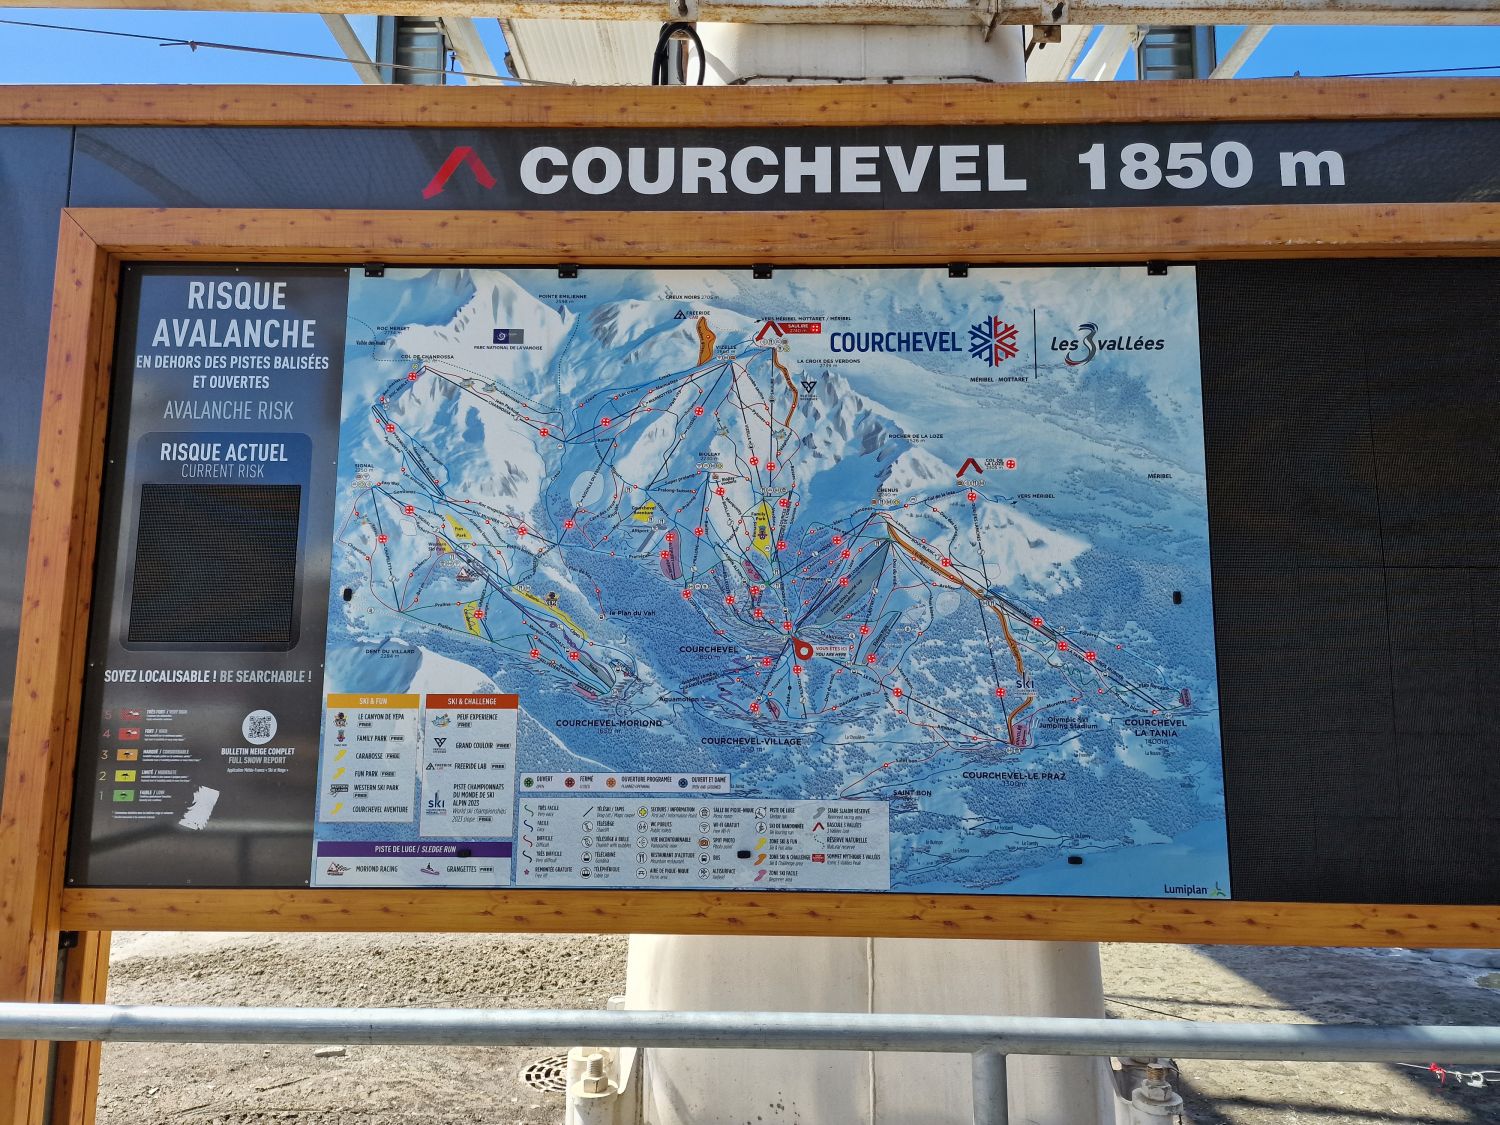 Ski'd⛷into the #LVPopUp 💙 @louisvuitton #Courchevel #Ski #SwissAlps  #France #AnshukaYoga